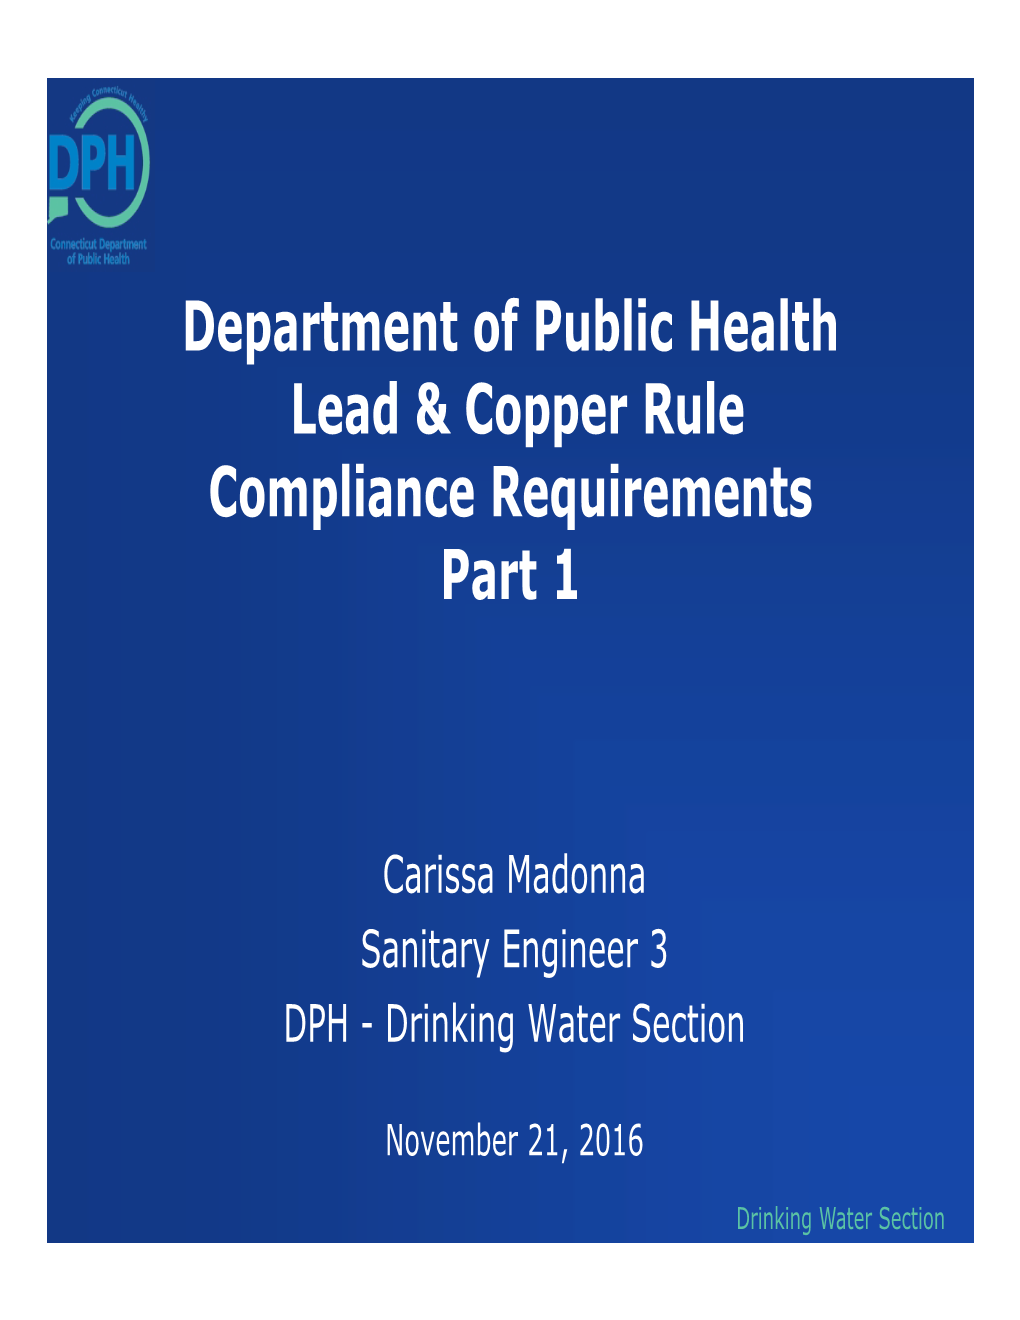 Department of Public Health Lead & Copper Rule Compliance